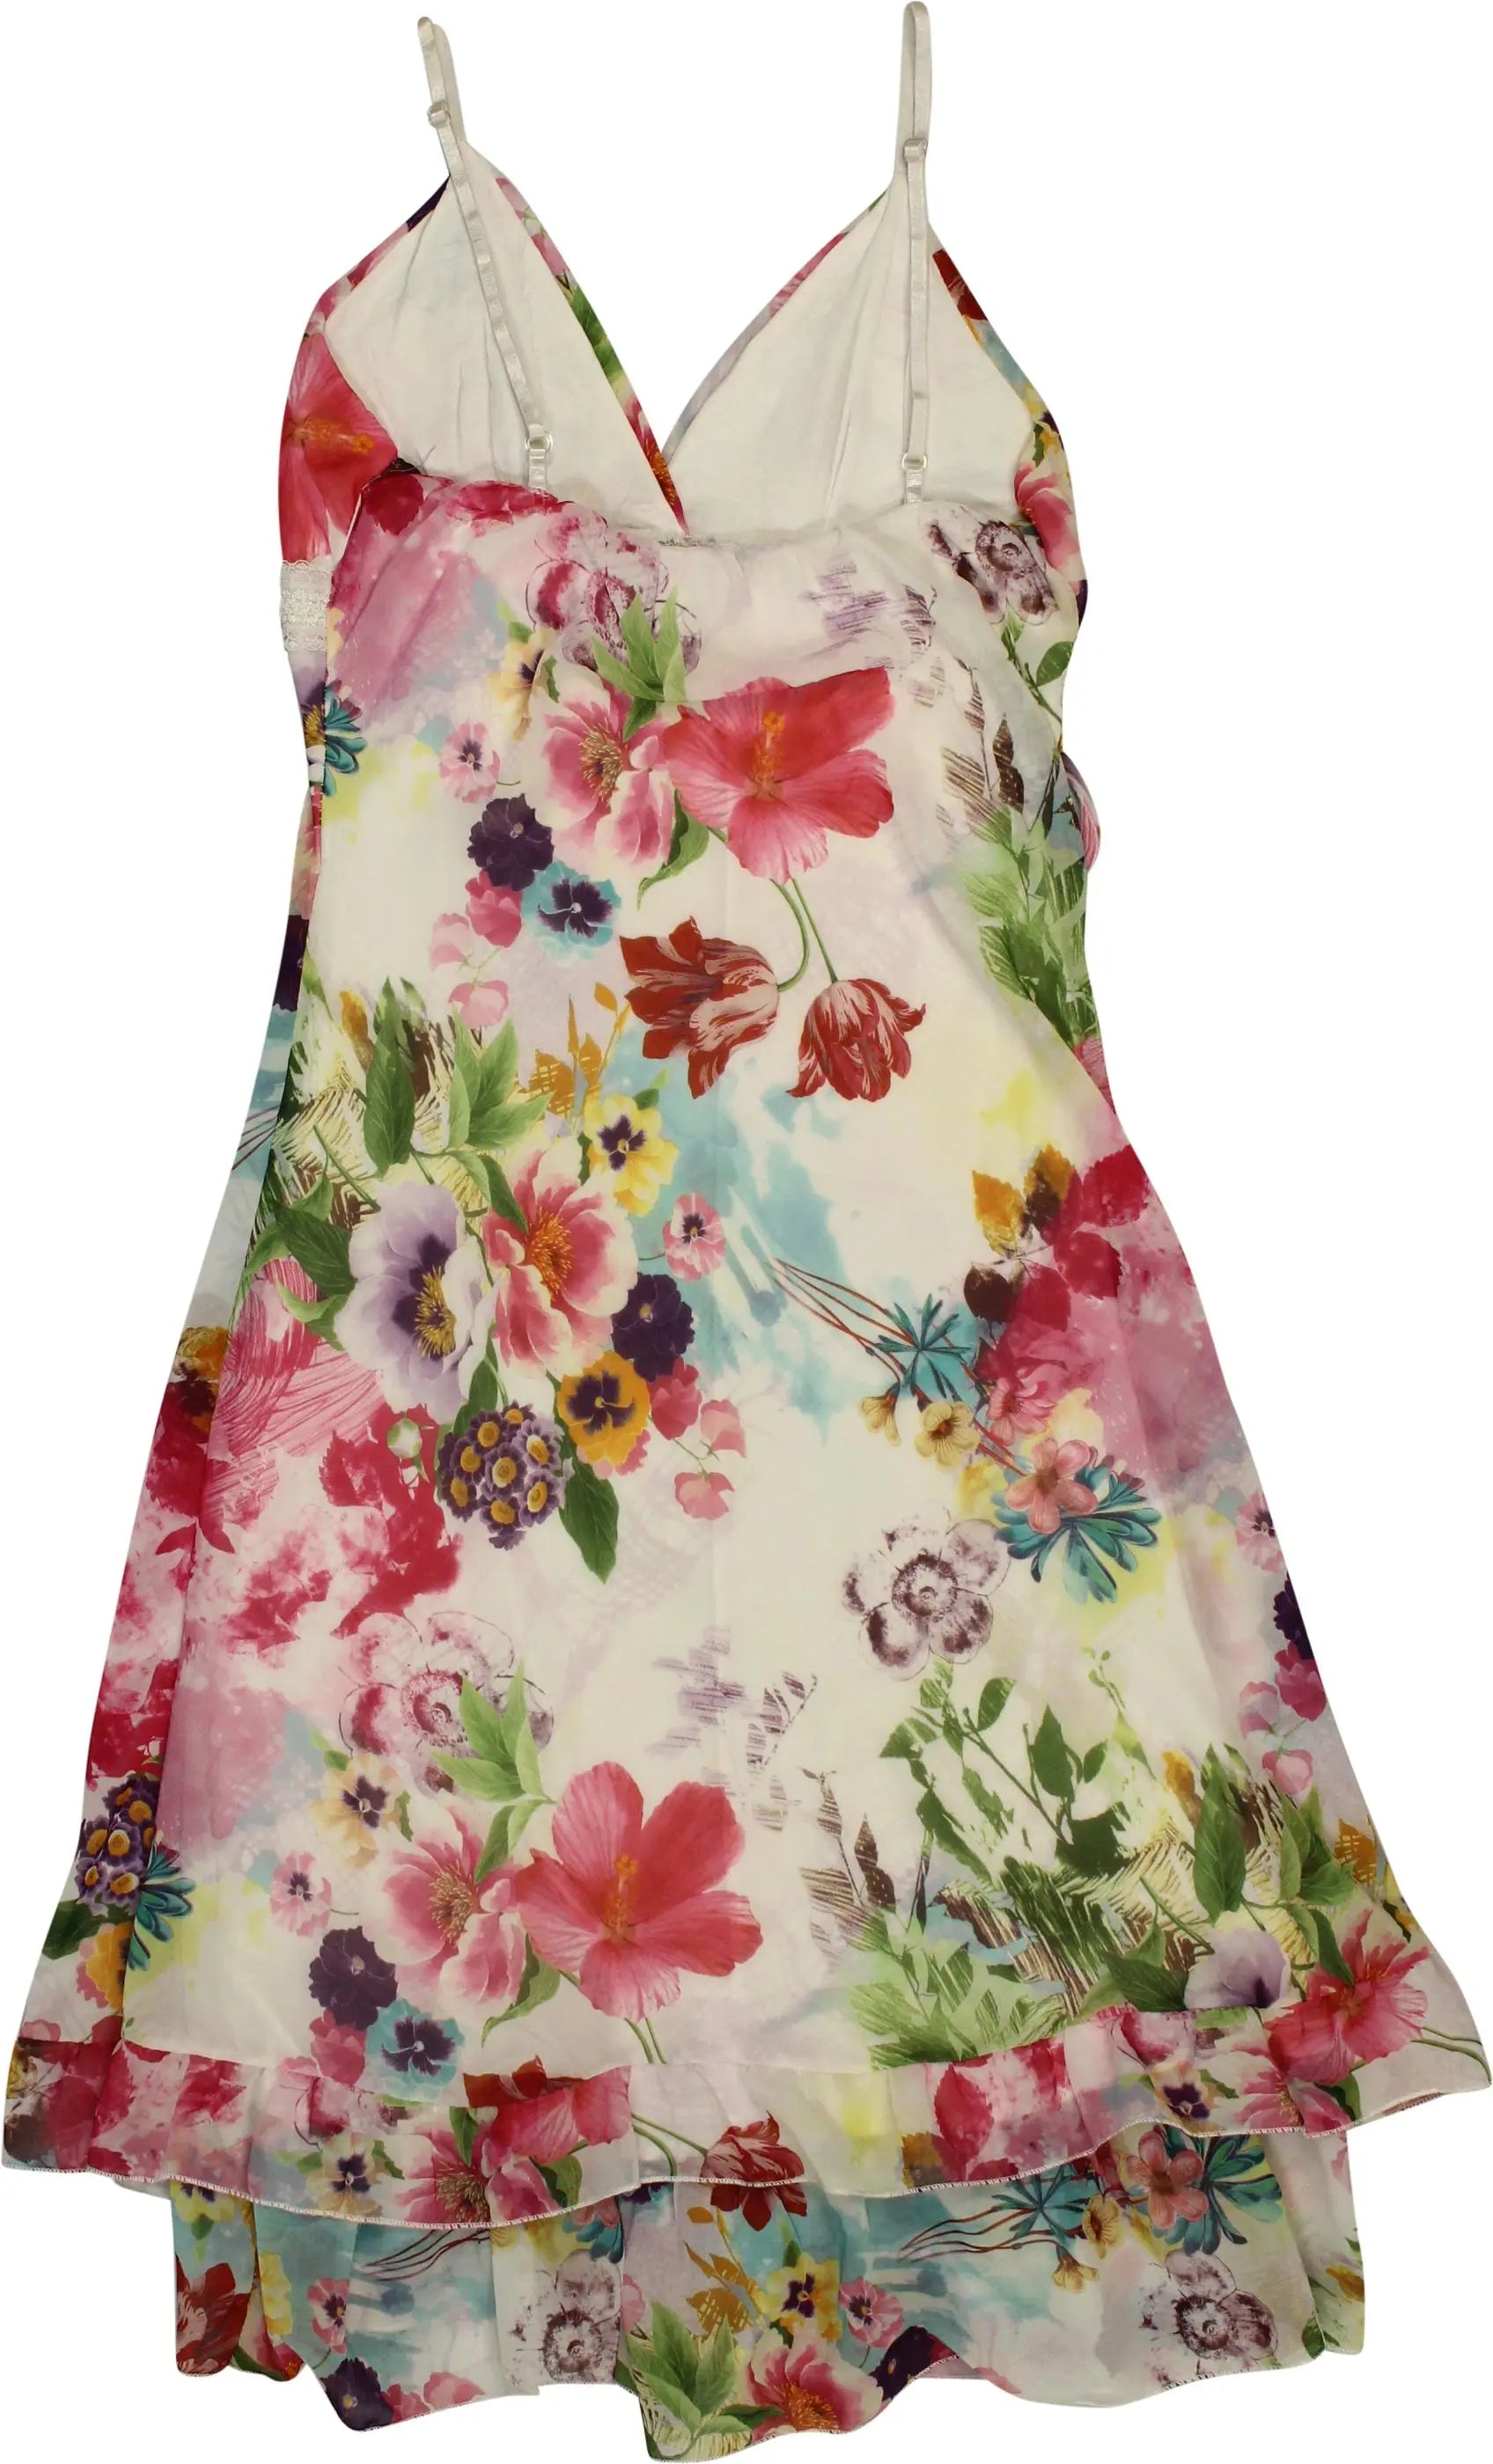 Meggie - Floral Dress- ThriftTale.com - Vintage and second handclothing